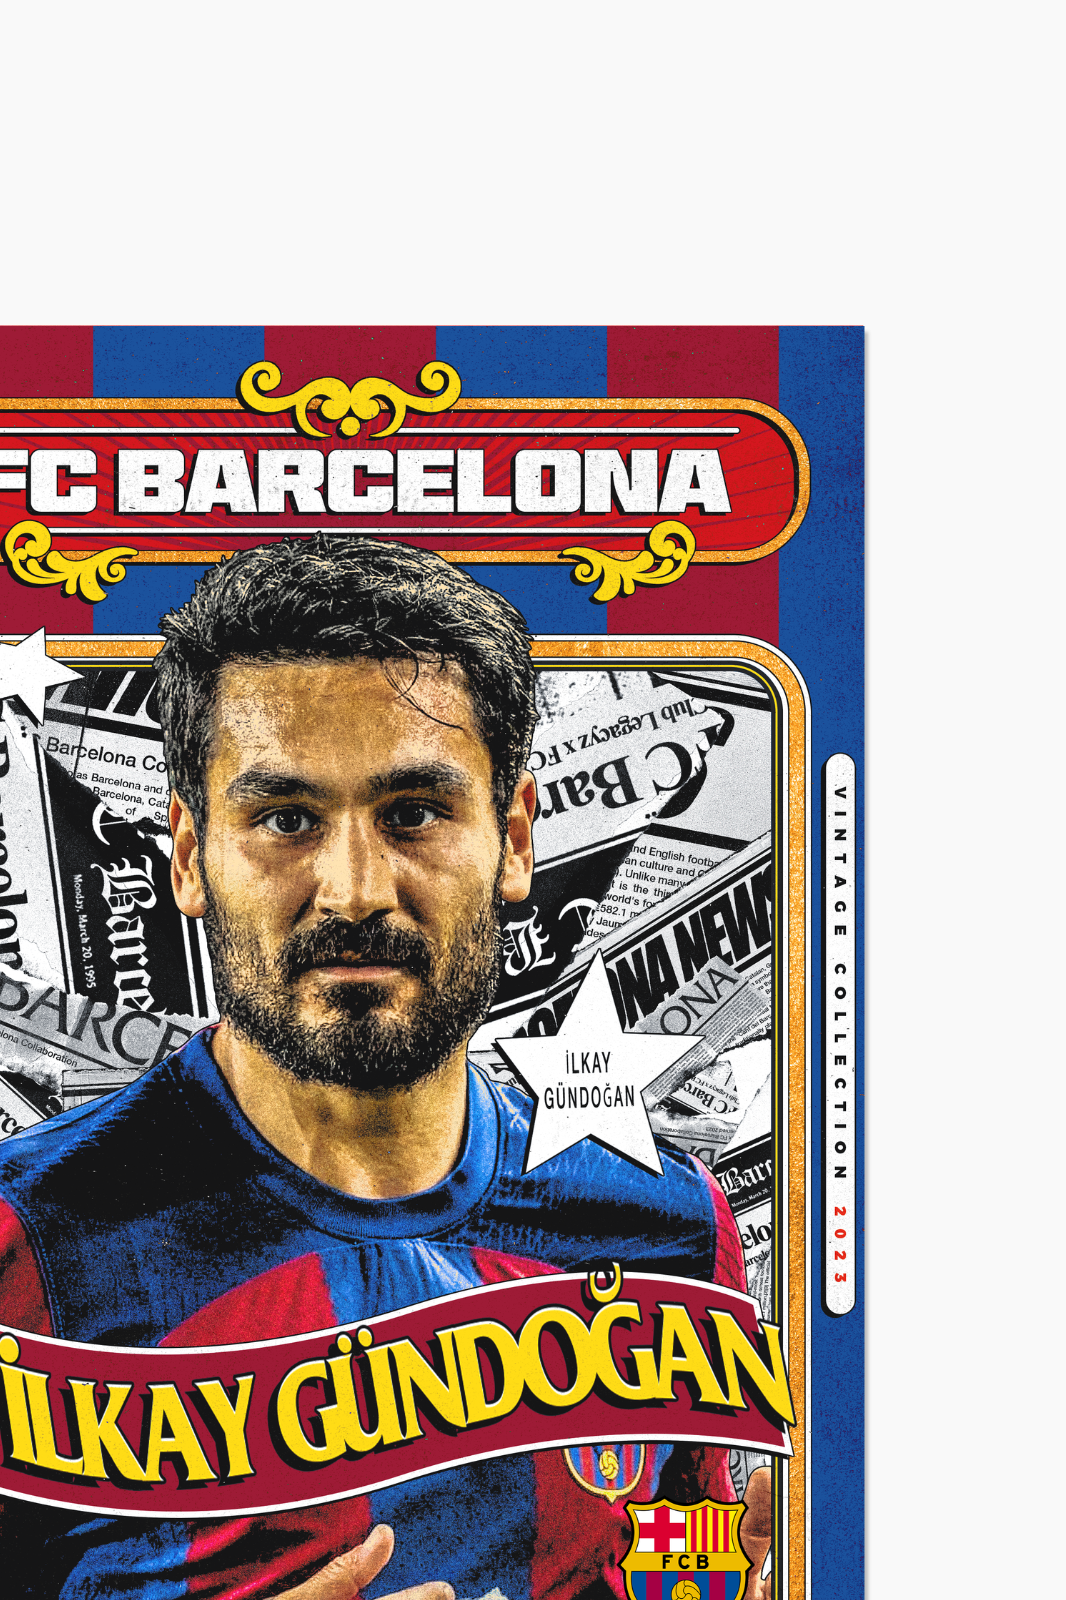 FC Barcelone - Poster Retro İlkay Gündogan 100 exemplaires